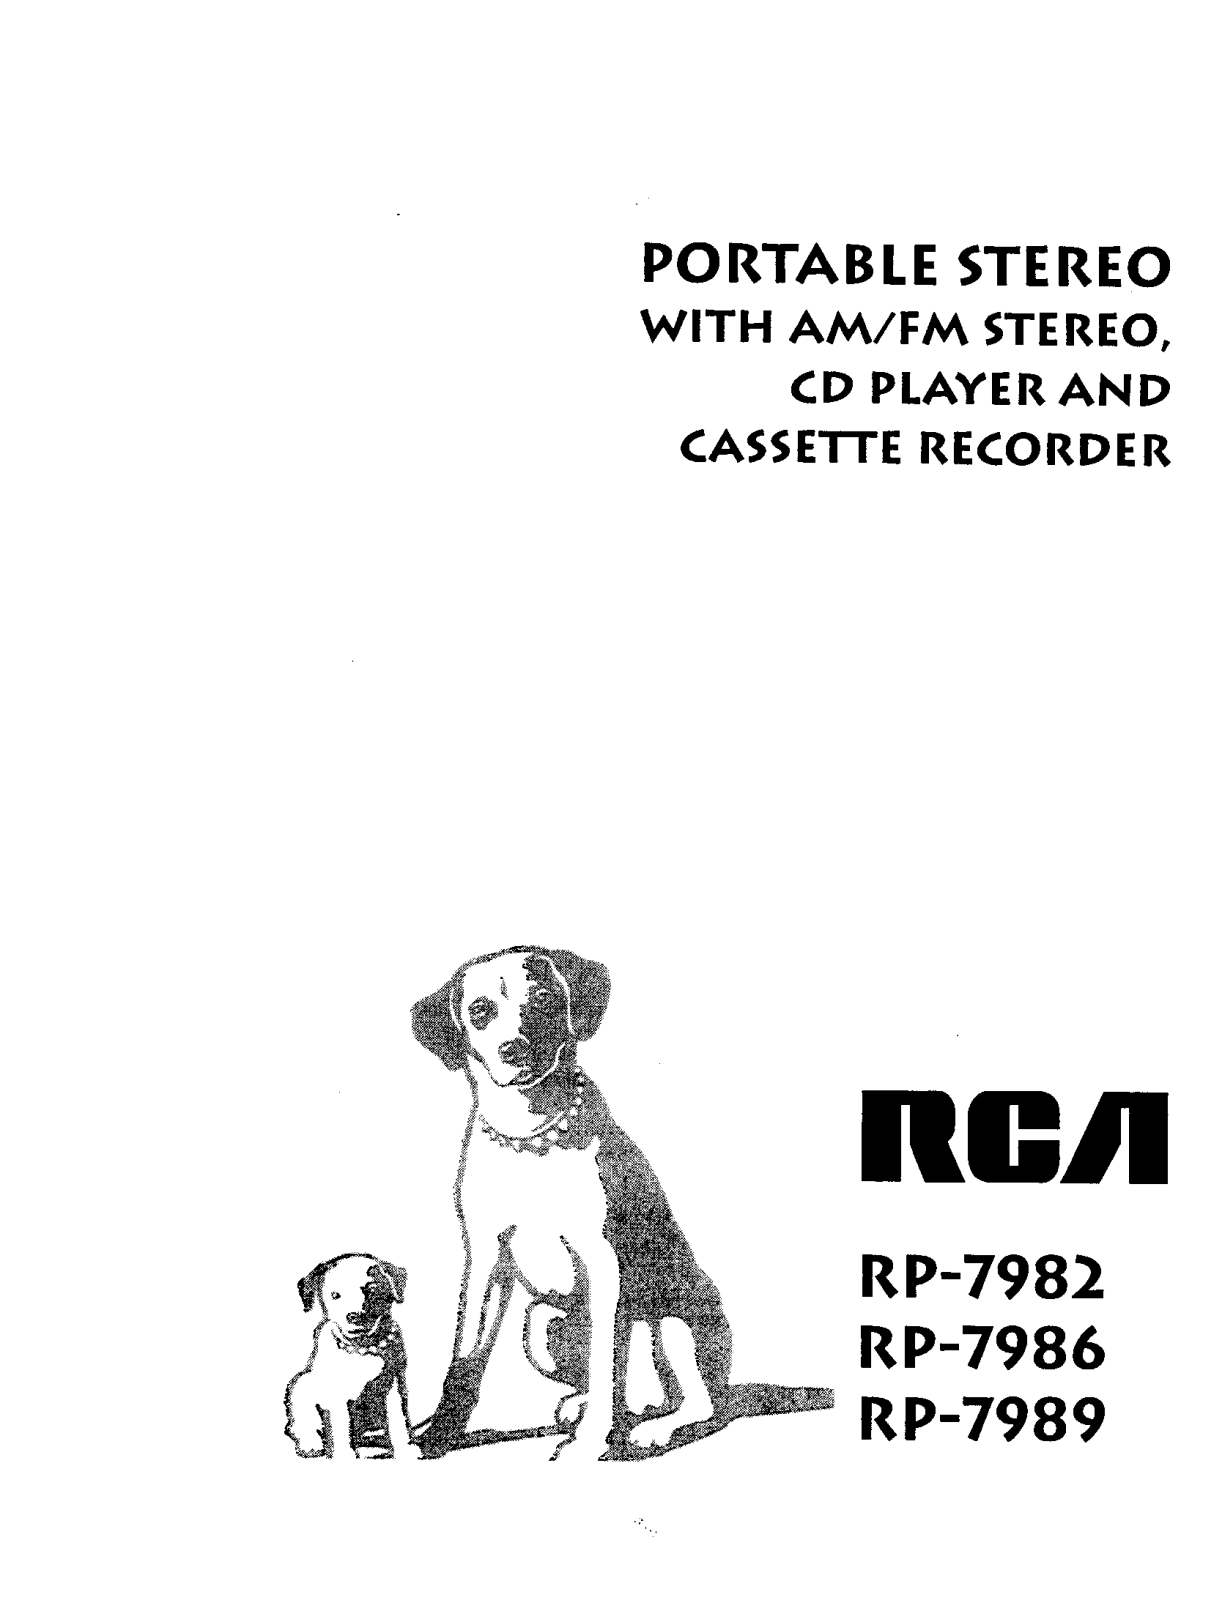 Rca RP-7986, RP-7989, RP-7982 User Manual